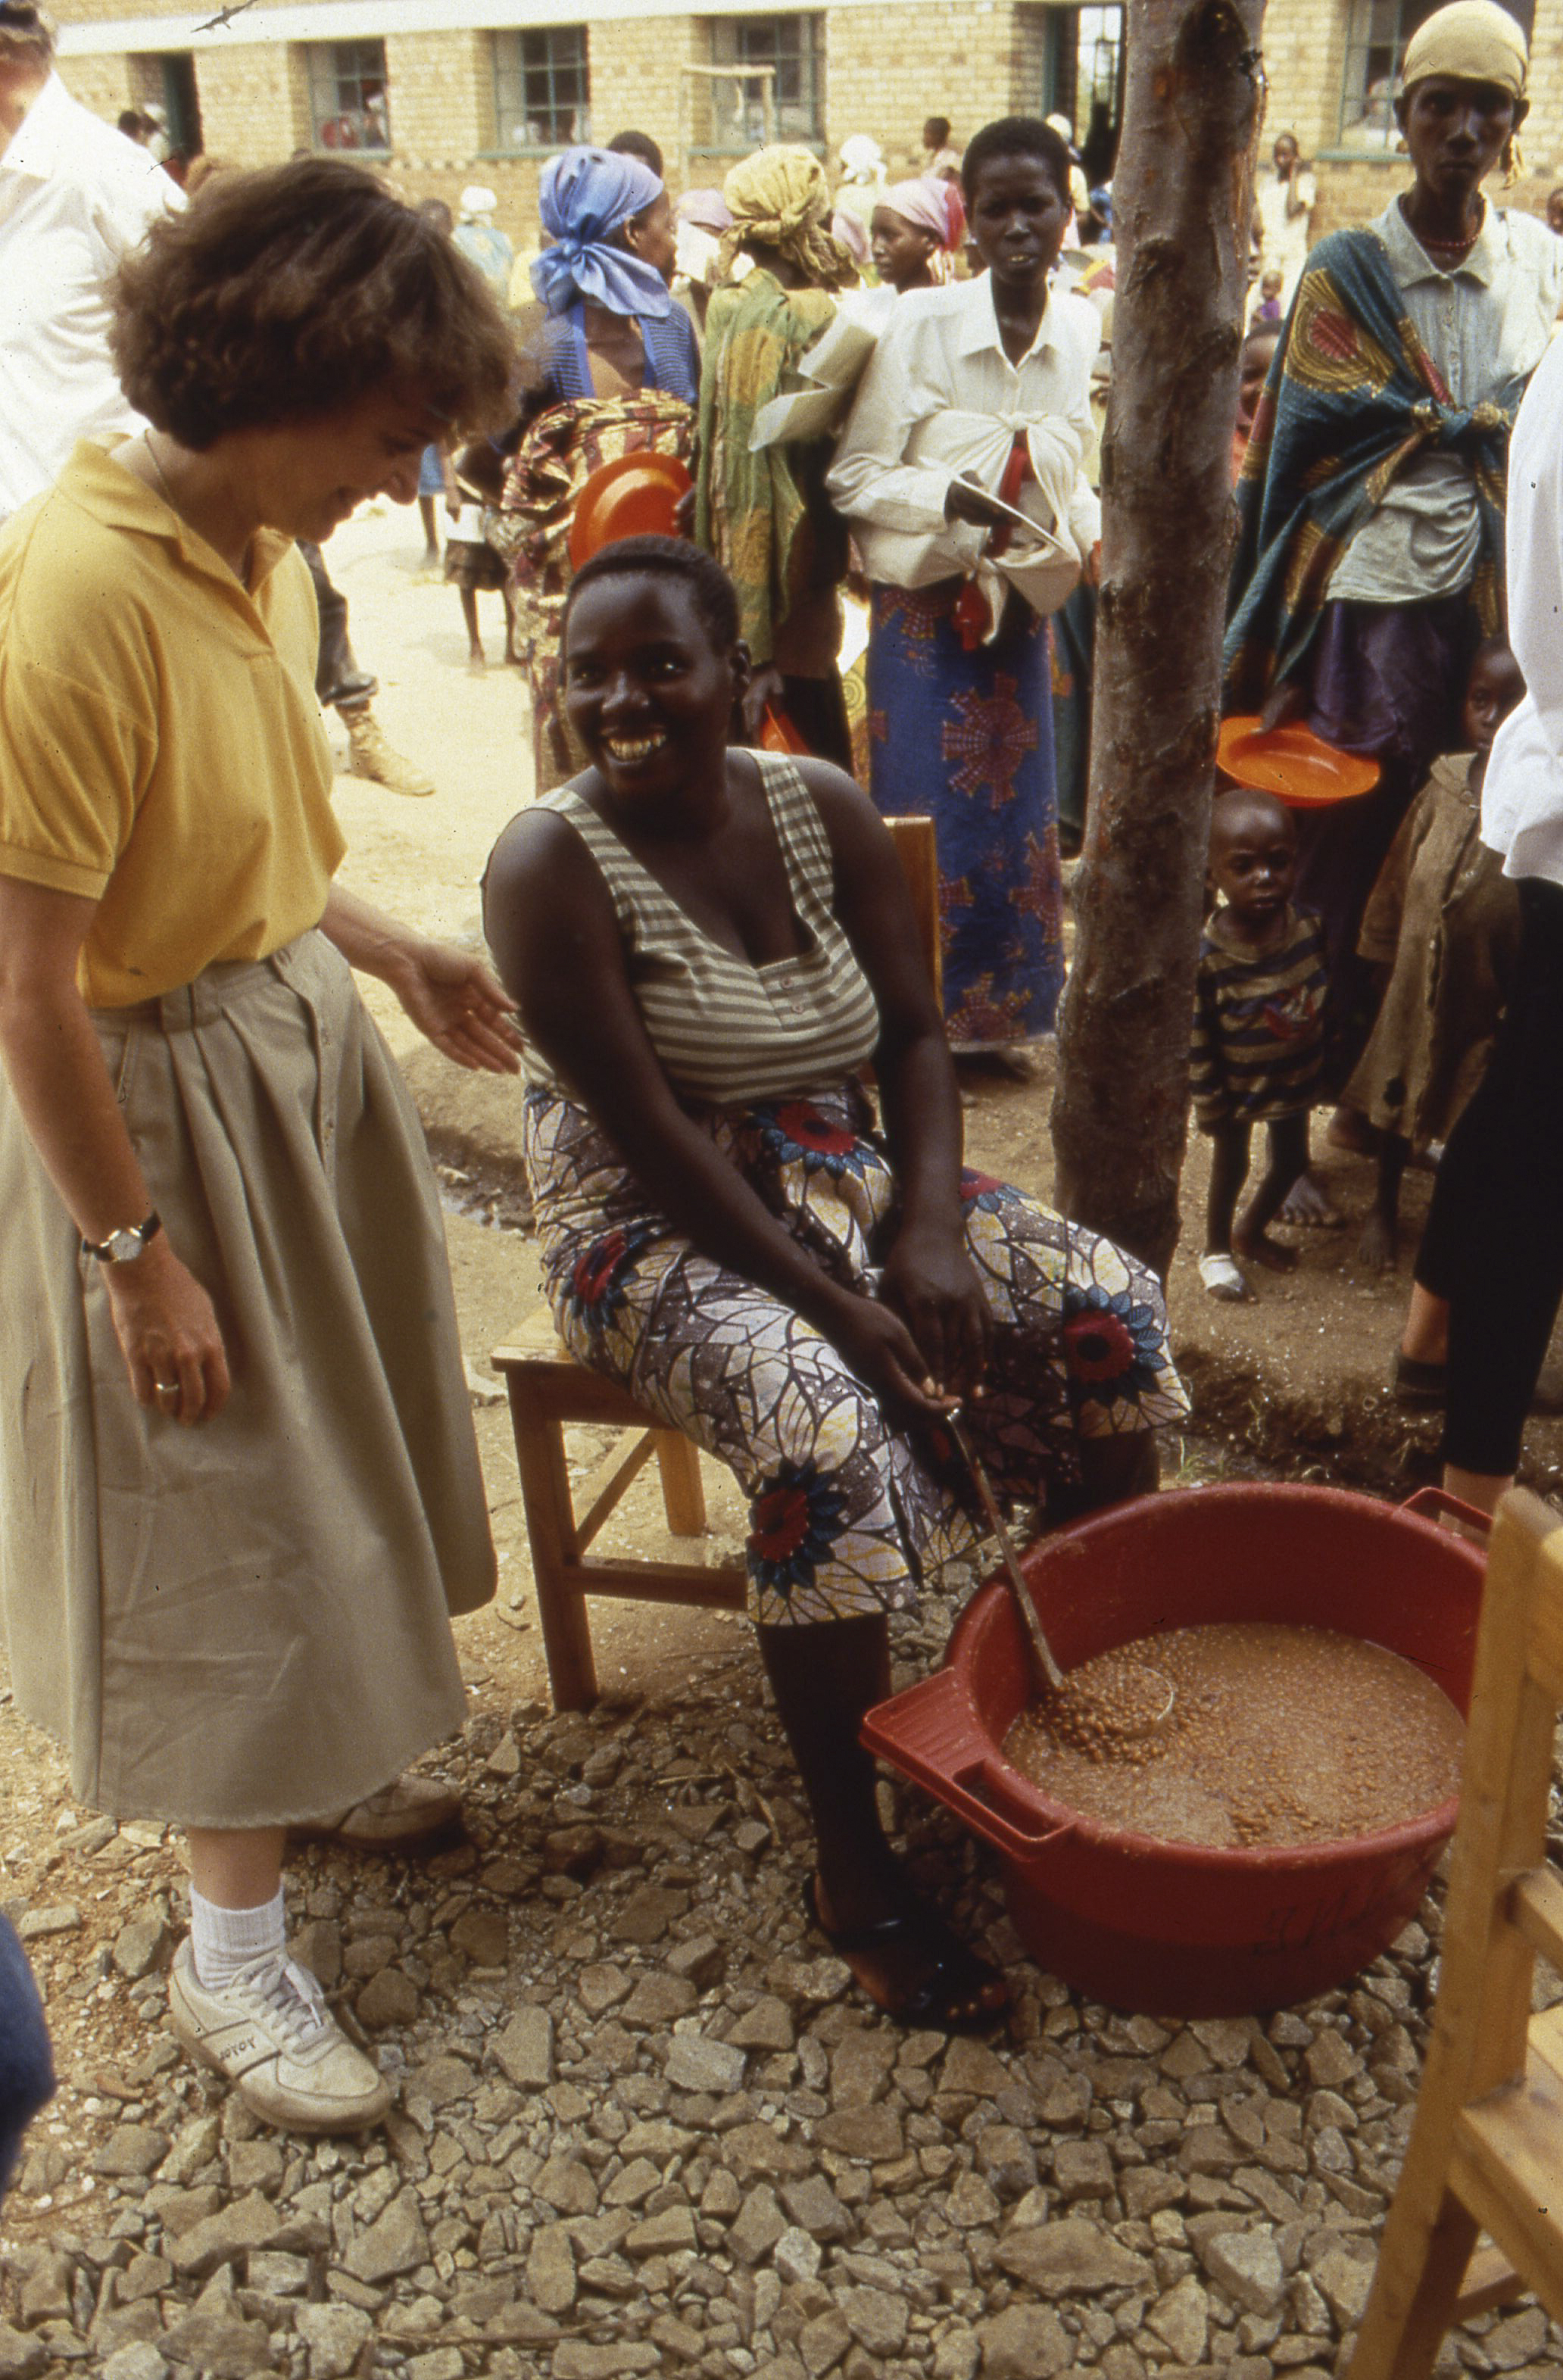  Rwanda 1994 (Photo by Tom Haskell) 